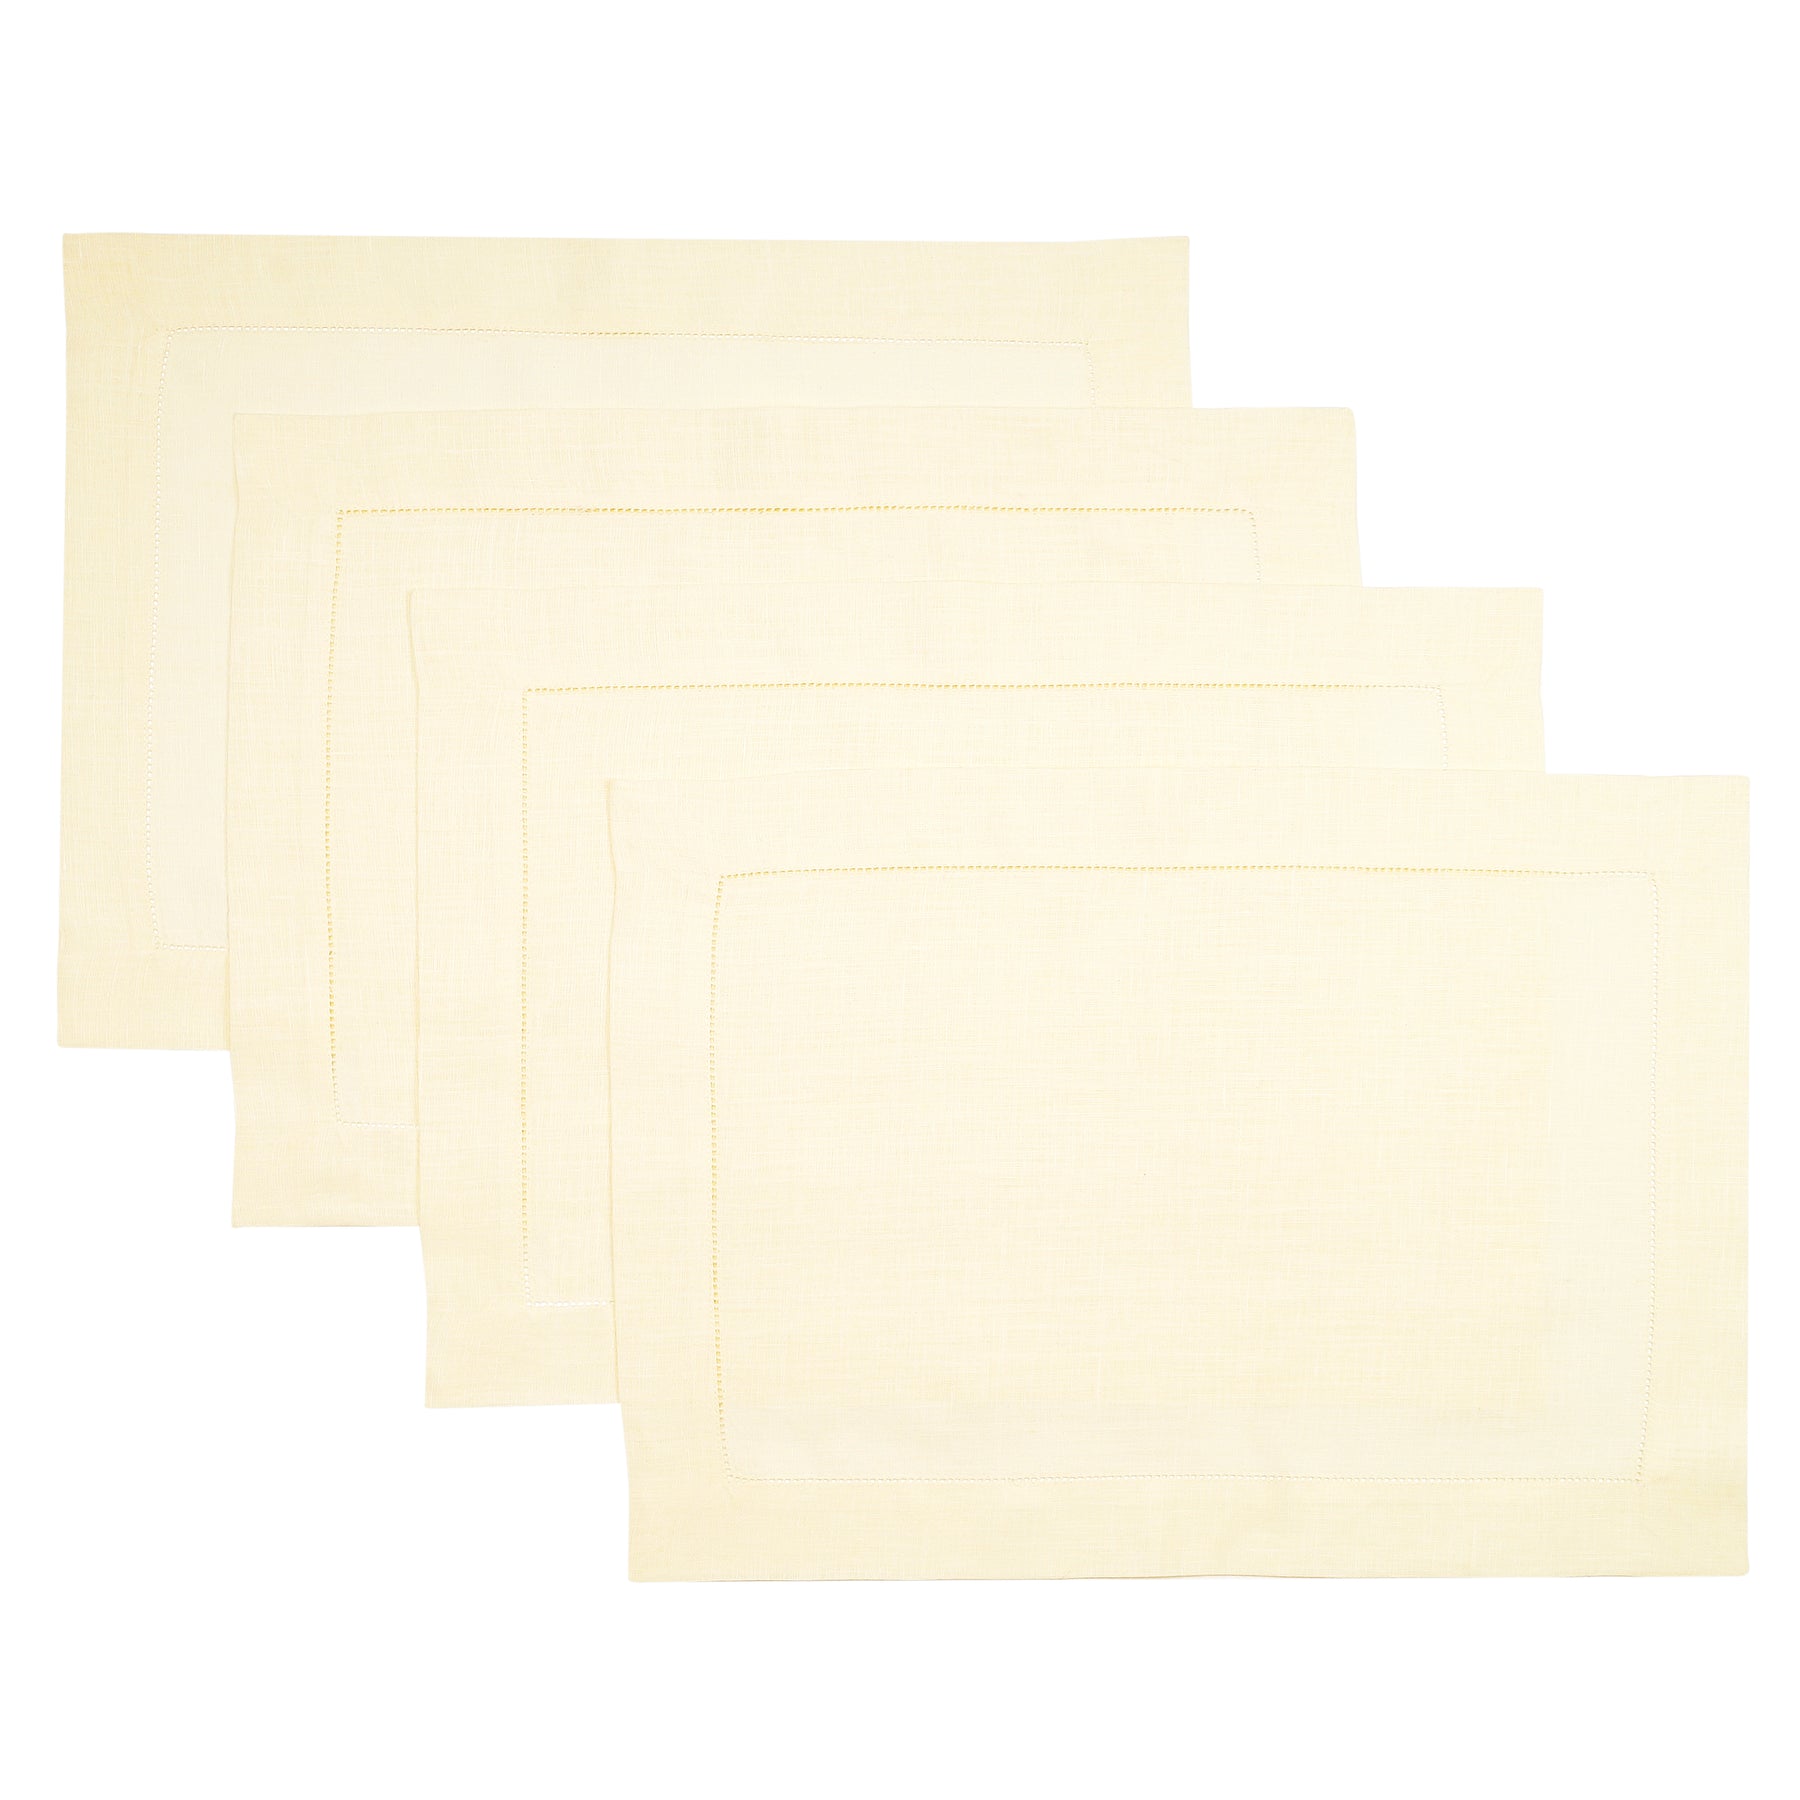 Cream Linen Placemats 14 x 19 Inch Set of 4 - Hemstitch